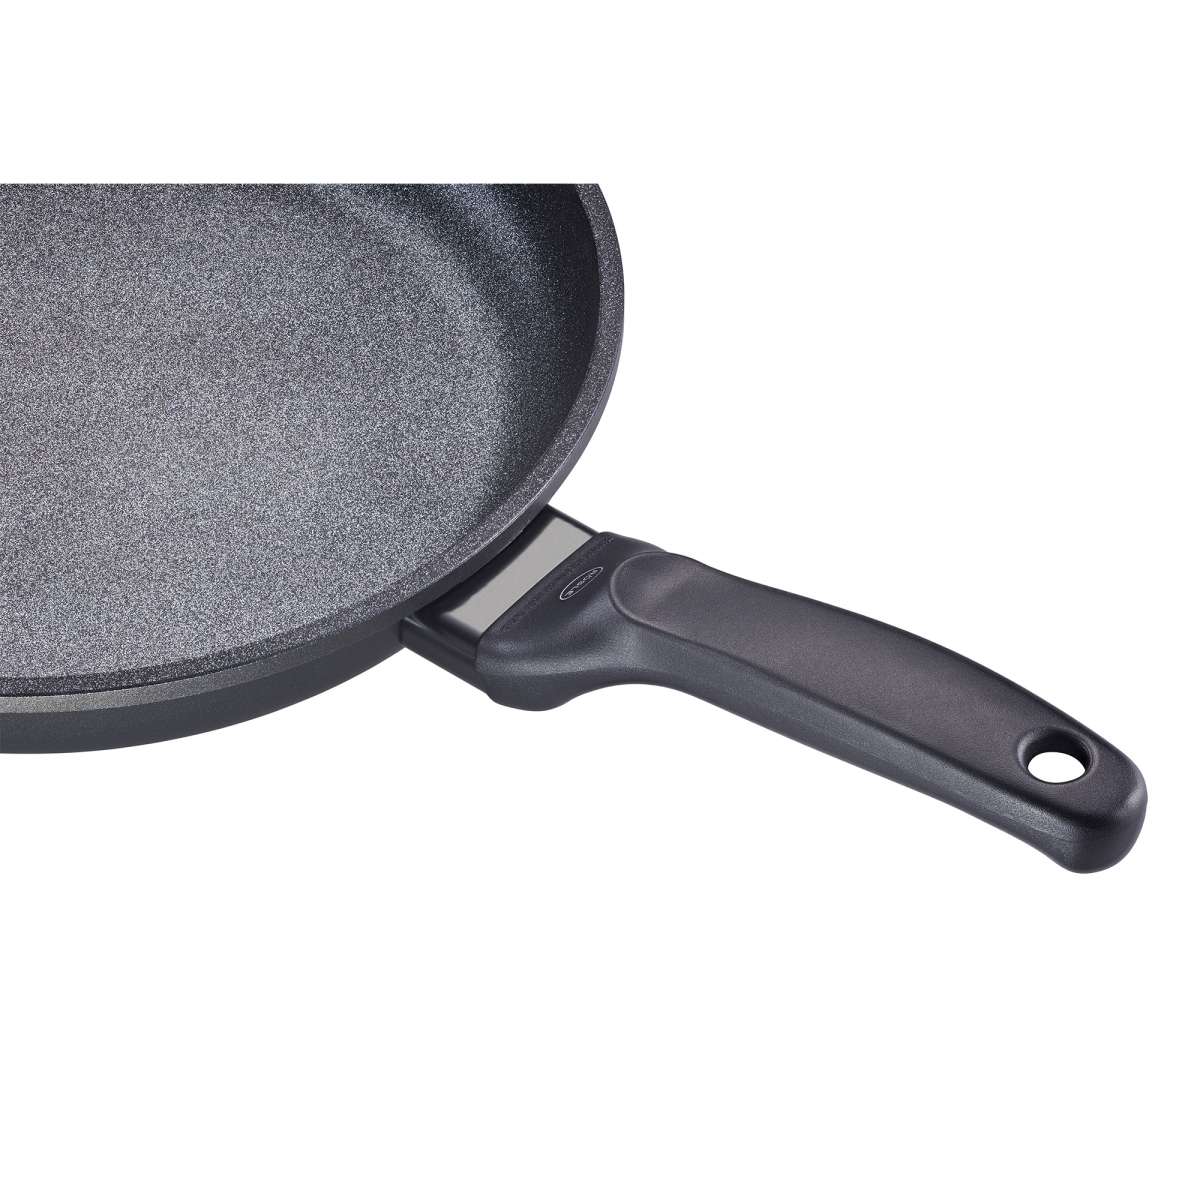 Rösle "Cadini" Non-Stick Frying Pan